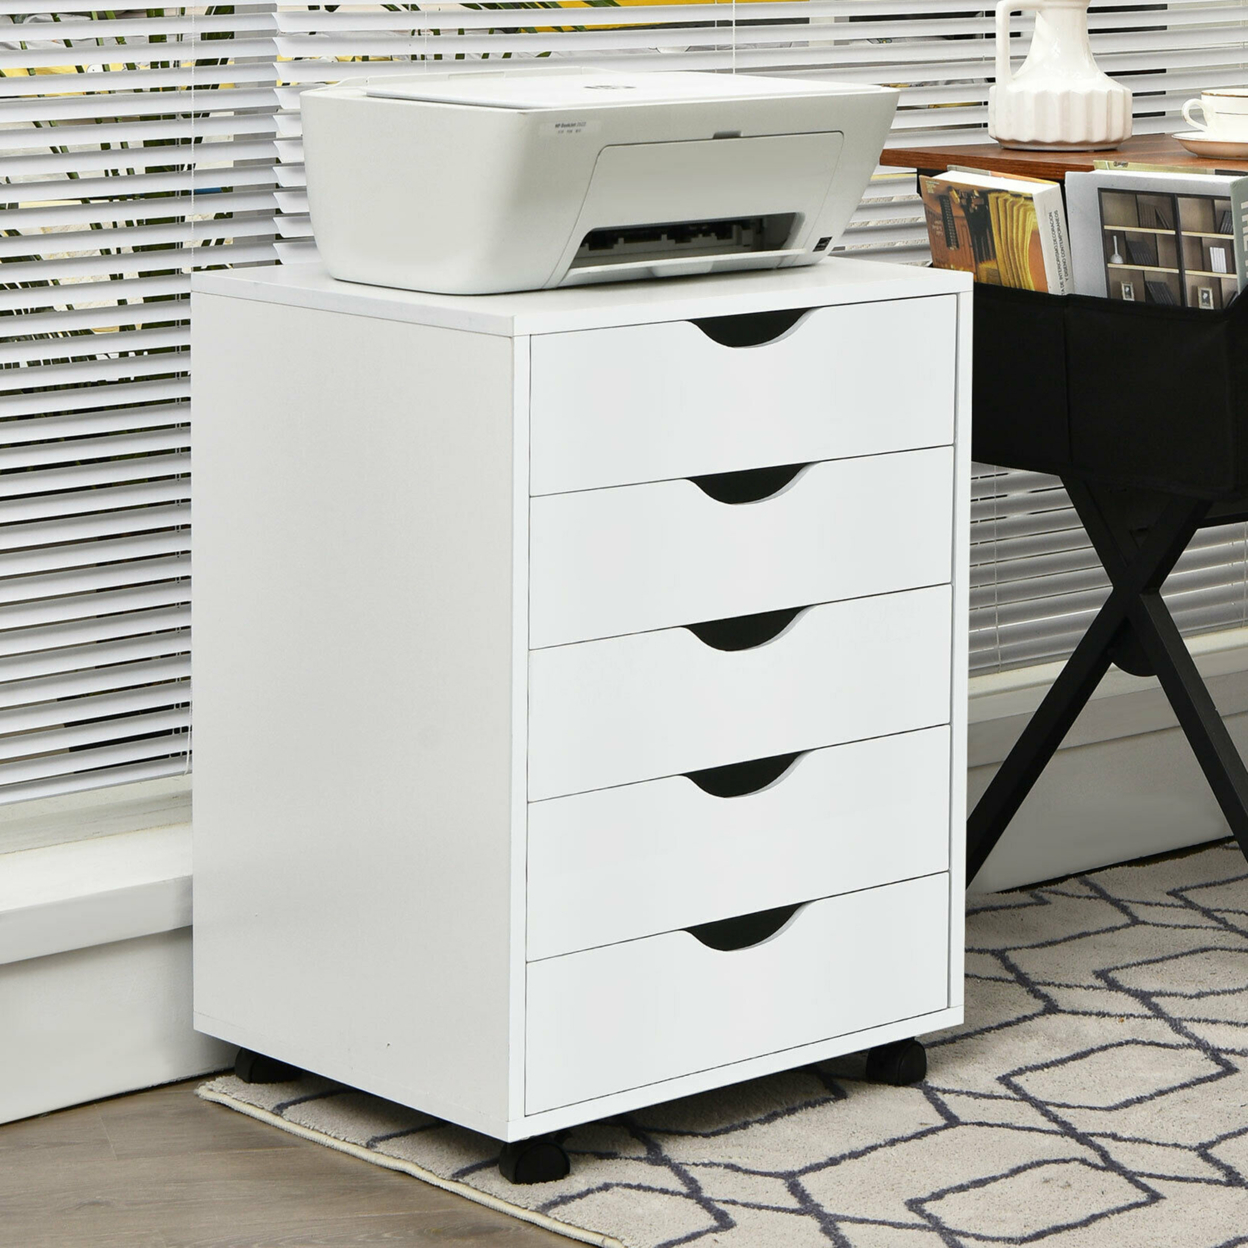 5 Drawer Dresser Storage Cabinet Chest W/Wheels For Home Office White